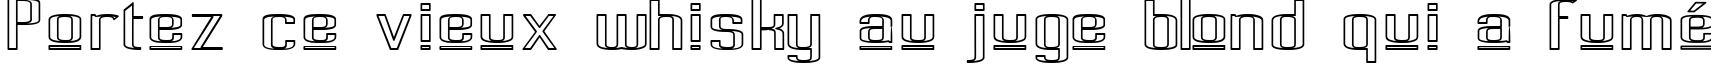 Пример написания шрифтом Pecot Upper Outline текста на французском